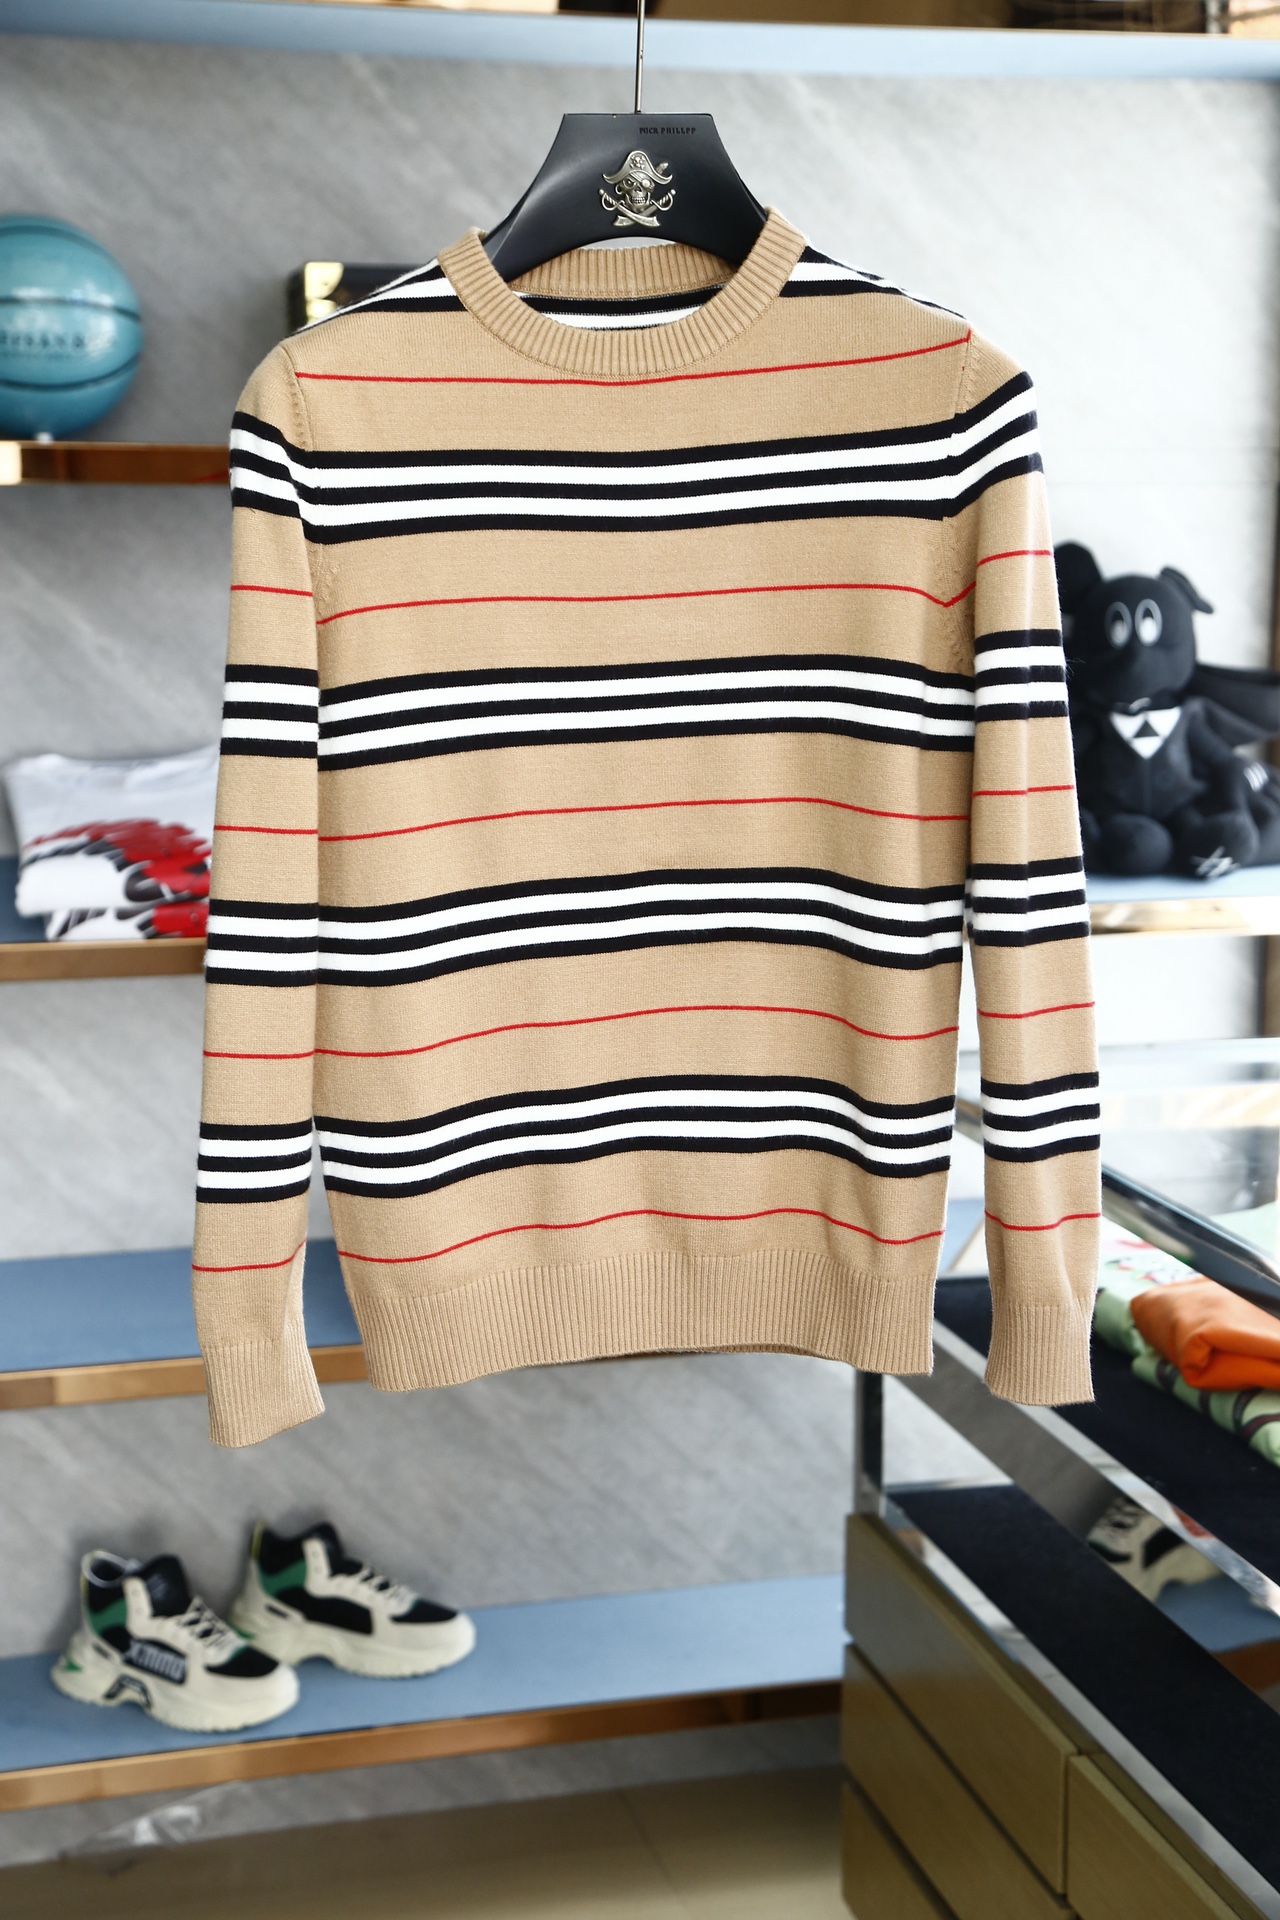 Burberry Fashion Clothing Sweatshirts Lattice Knitting Wool Fall/Winter Collection Fashion Casual